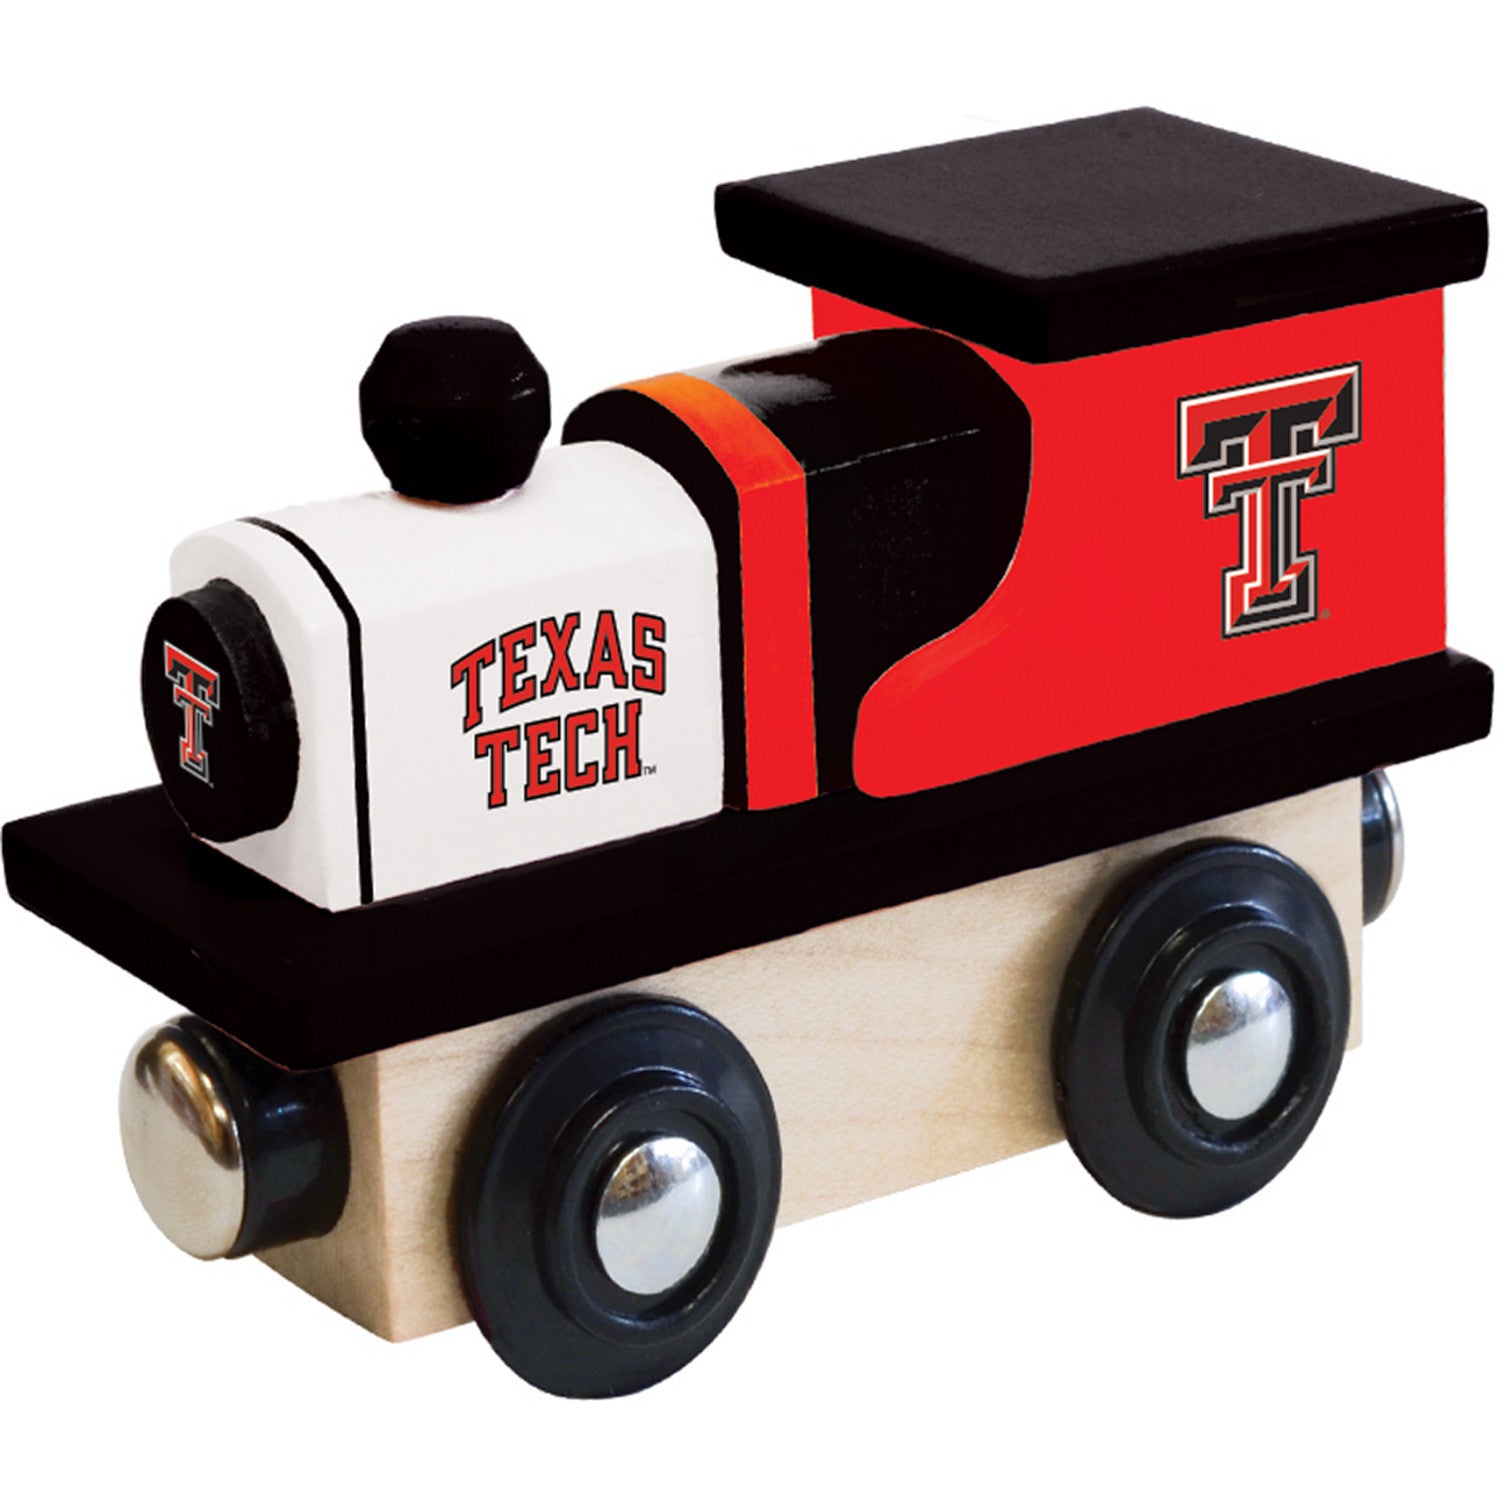 Texas Tech Red Raiders Toy Train Engine